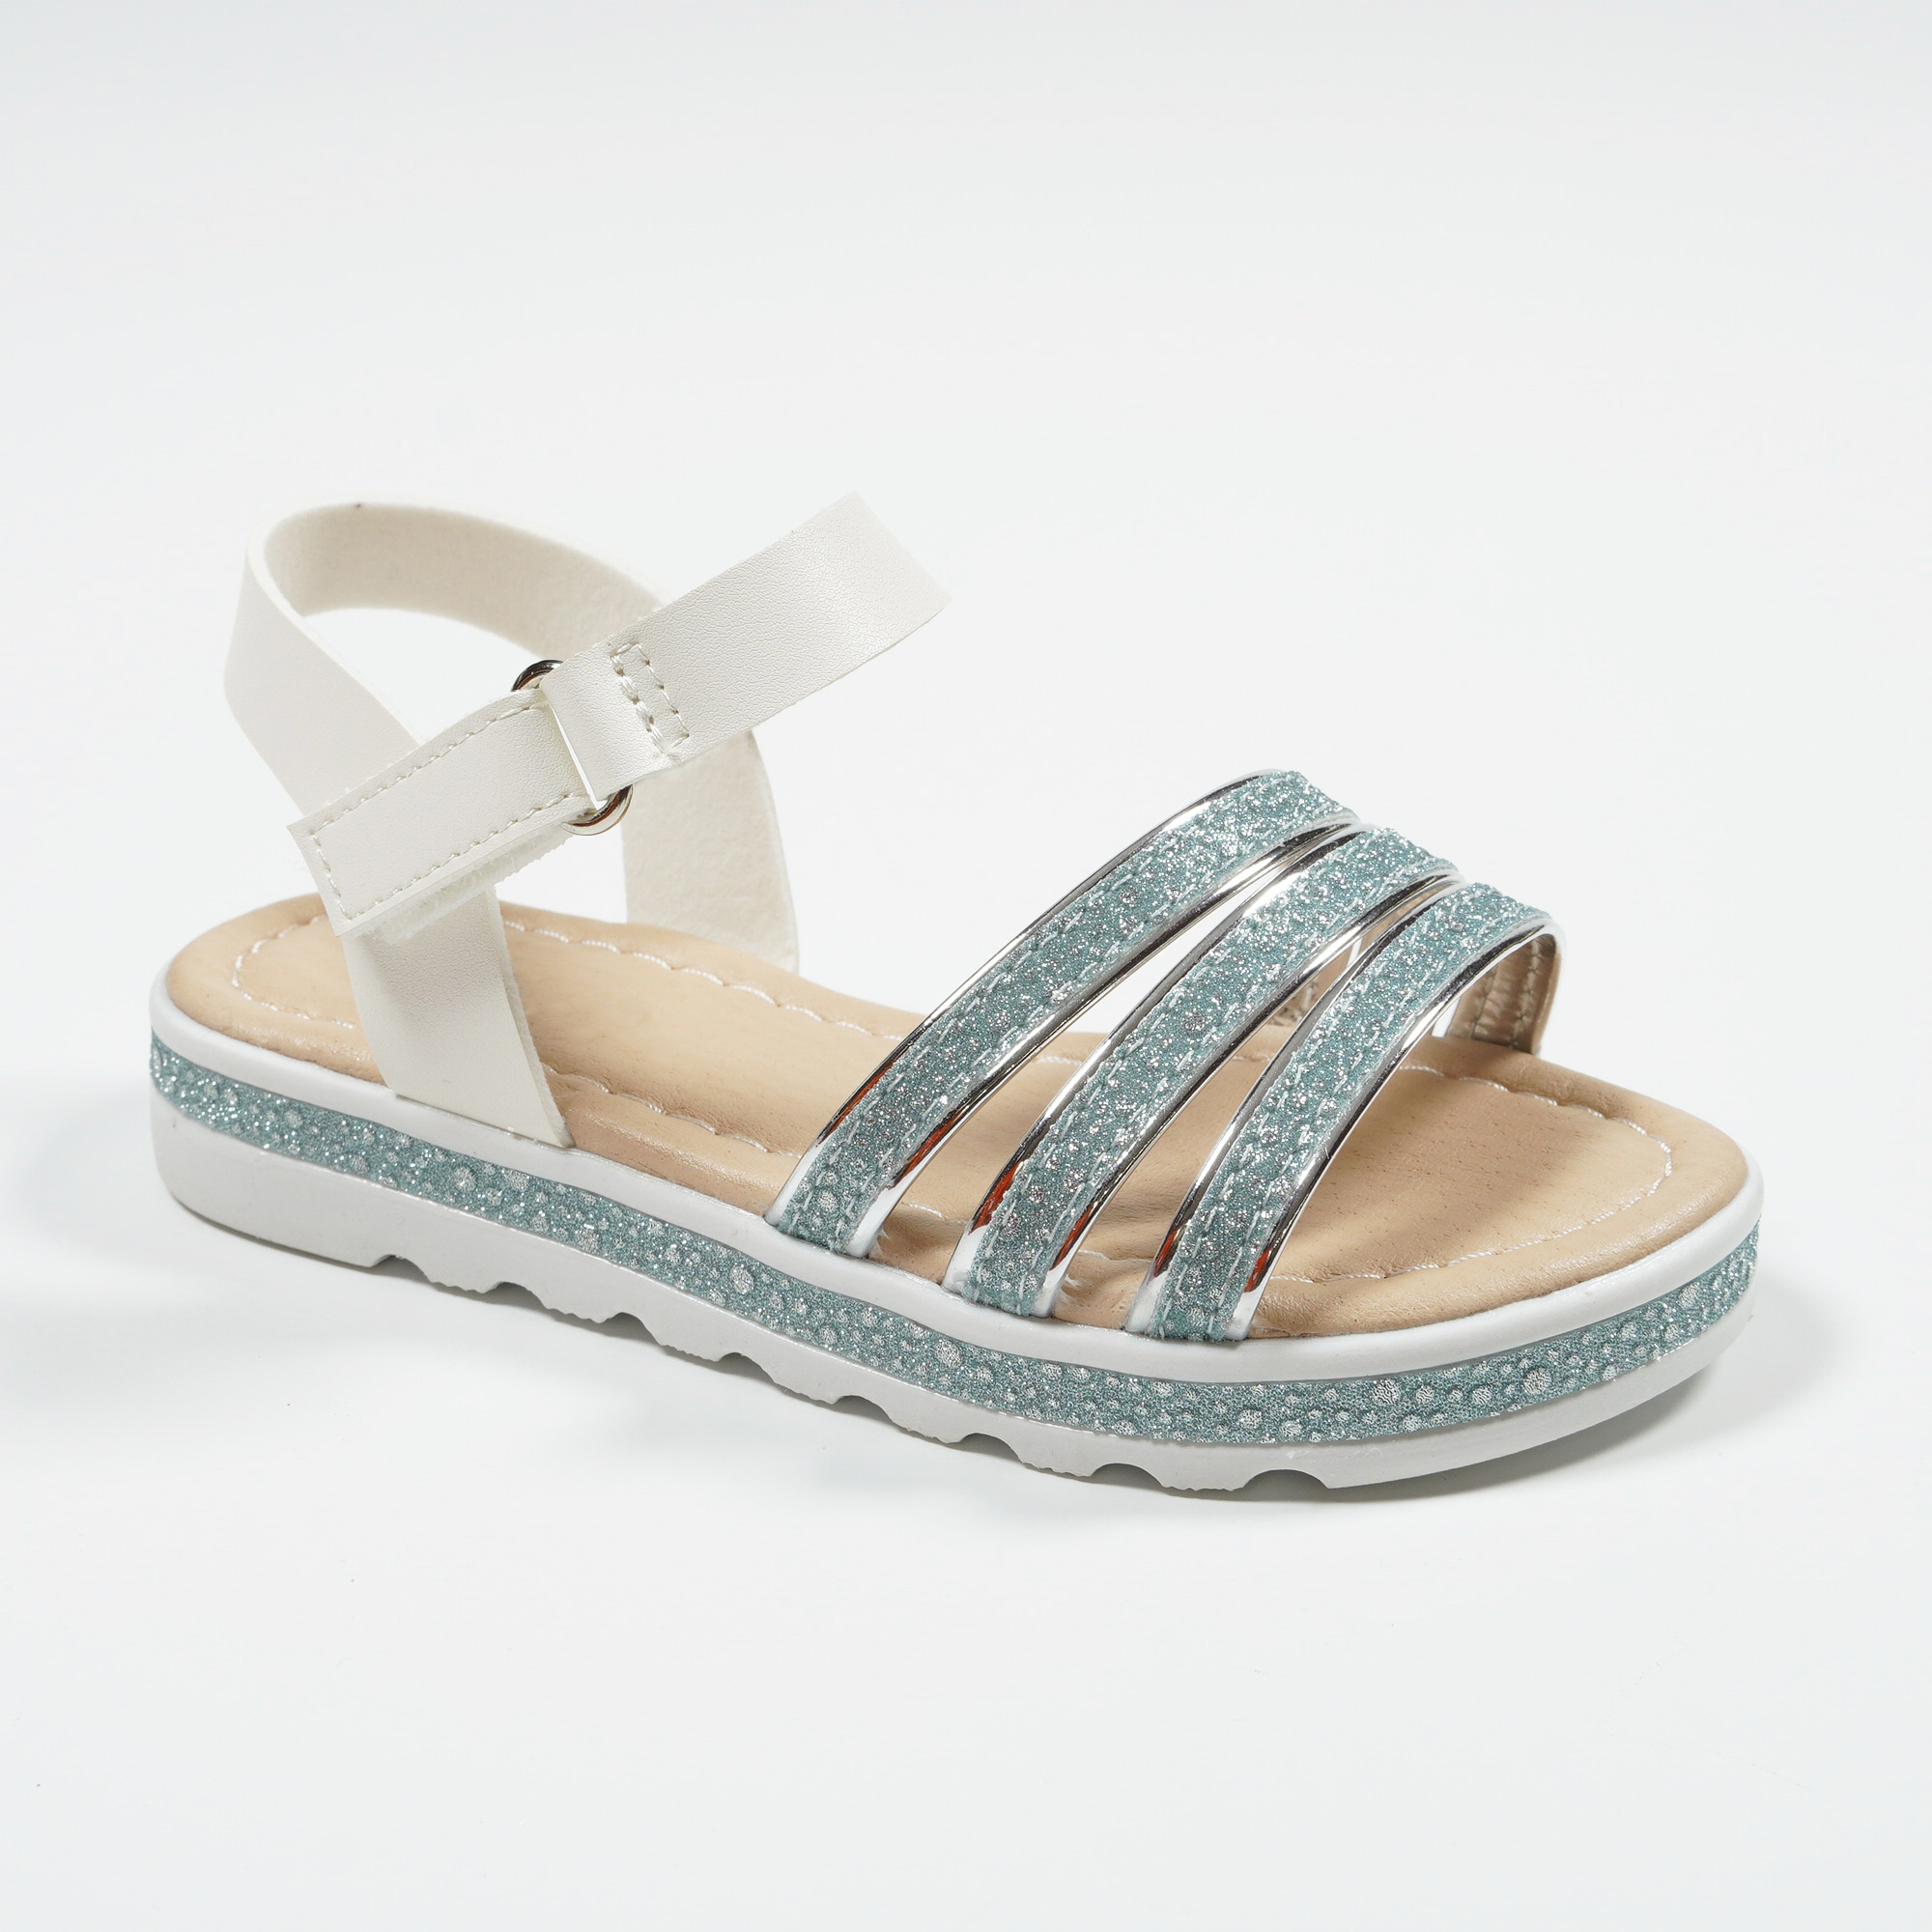 Nikoofly-New-Shiny-Sequins-Non-slip-Beach-Slippers-Glitter-Girls-Sandals-YDX0562K-3-blue